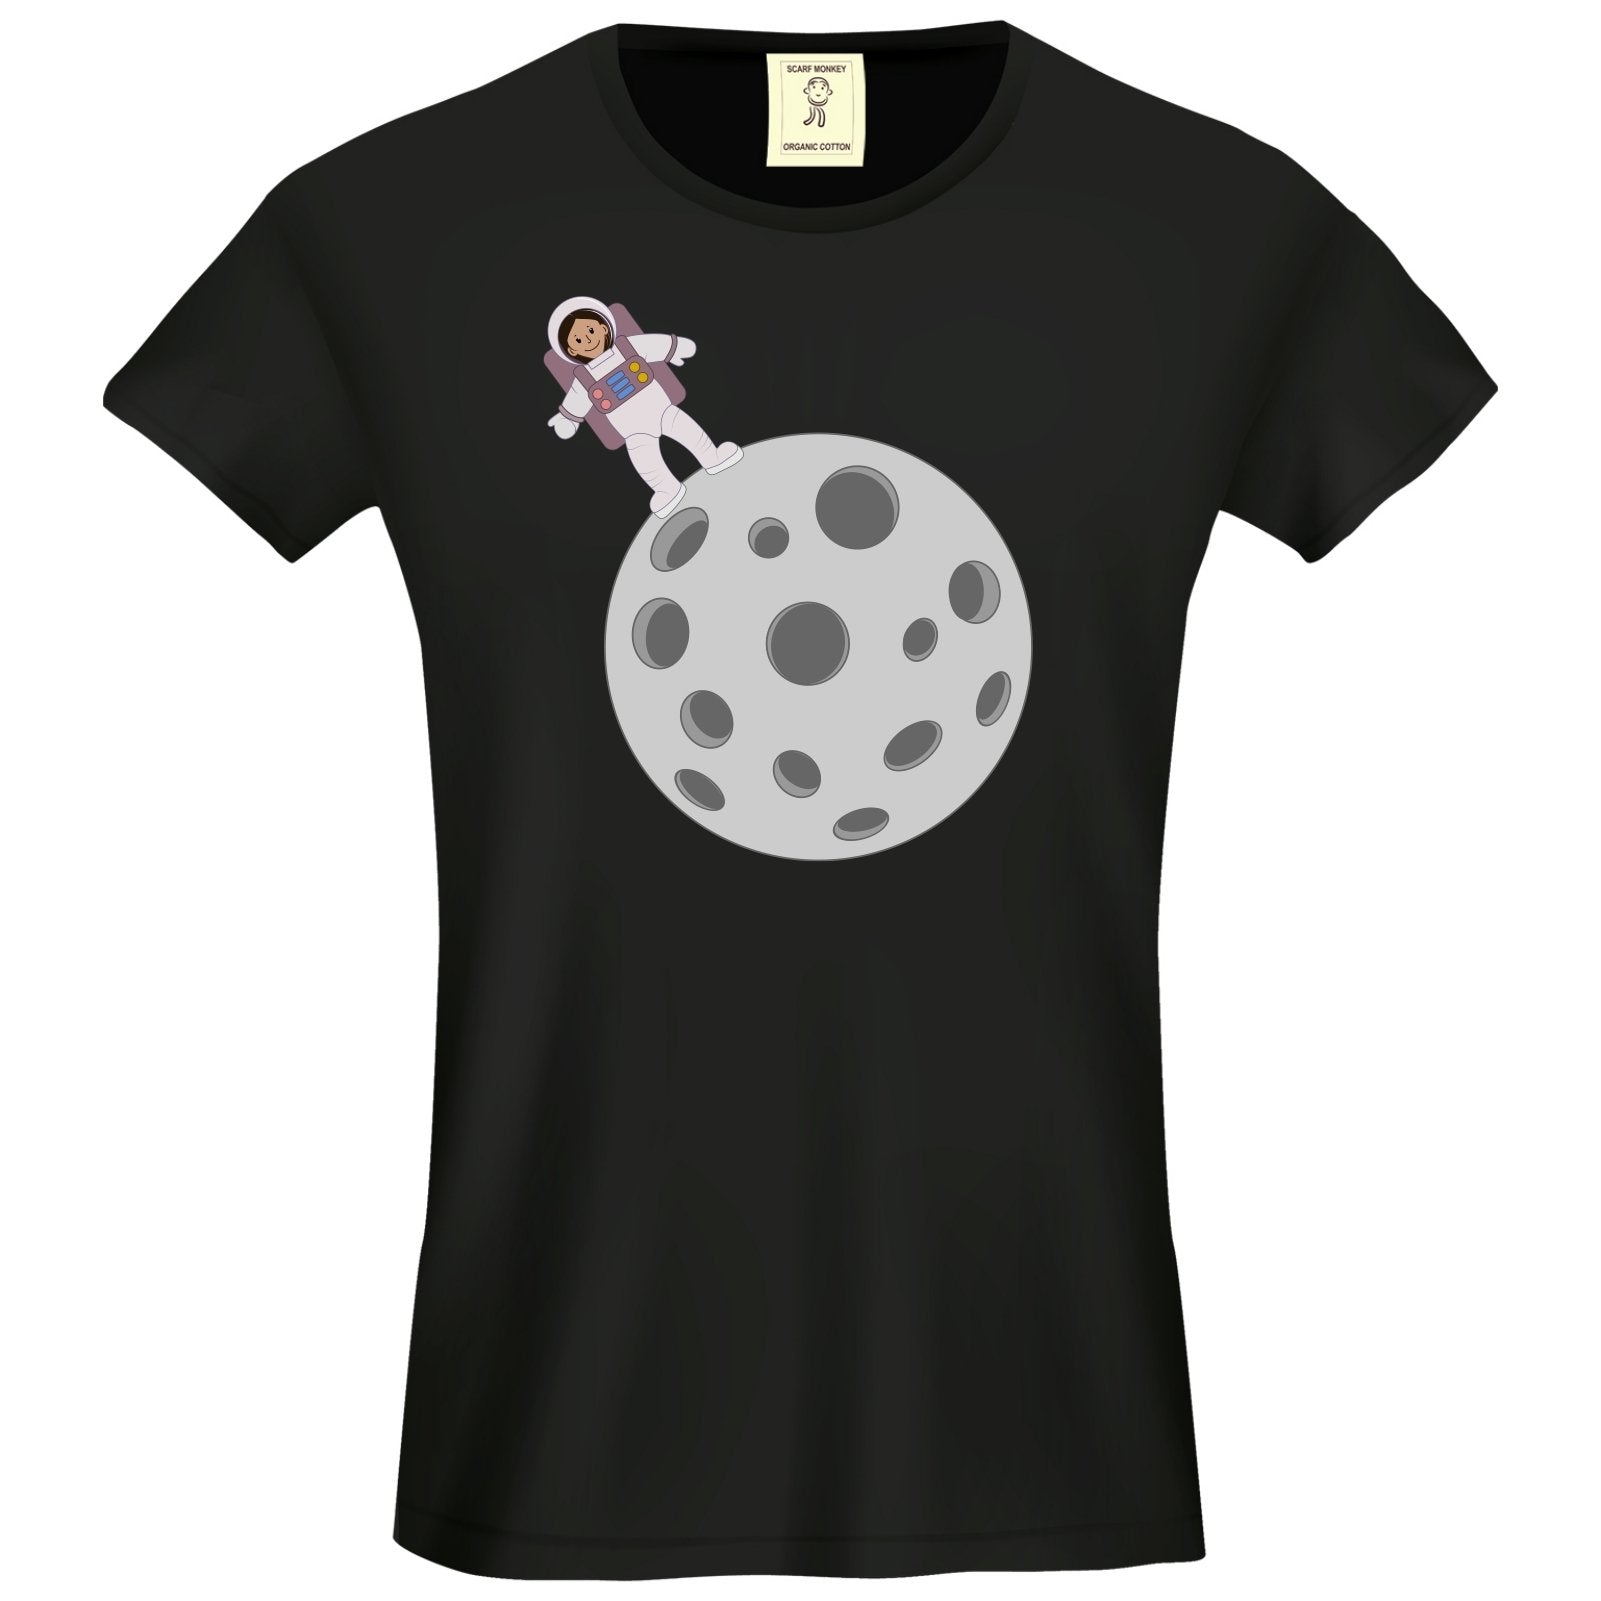 Lunar Landing Organic Cotton Girls T-Shirt - Scarf Monkey